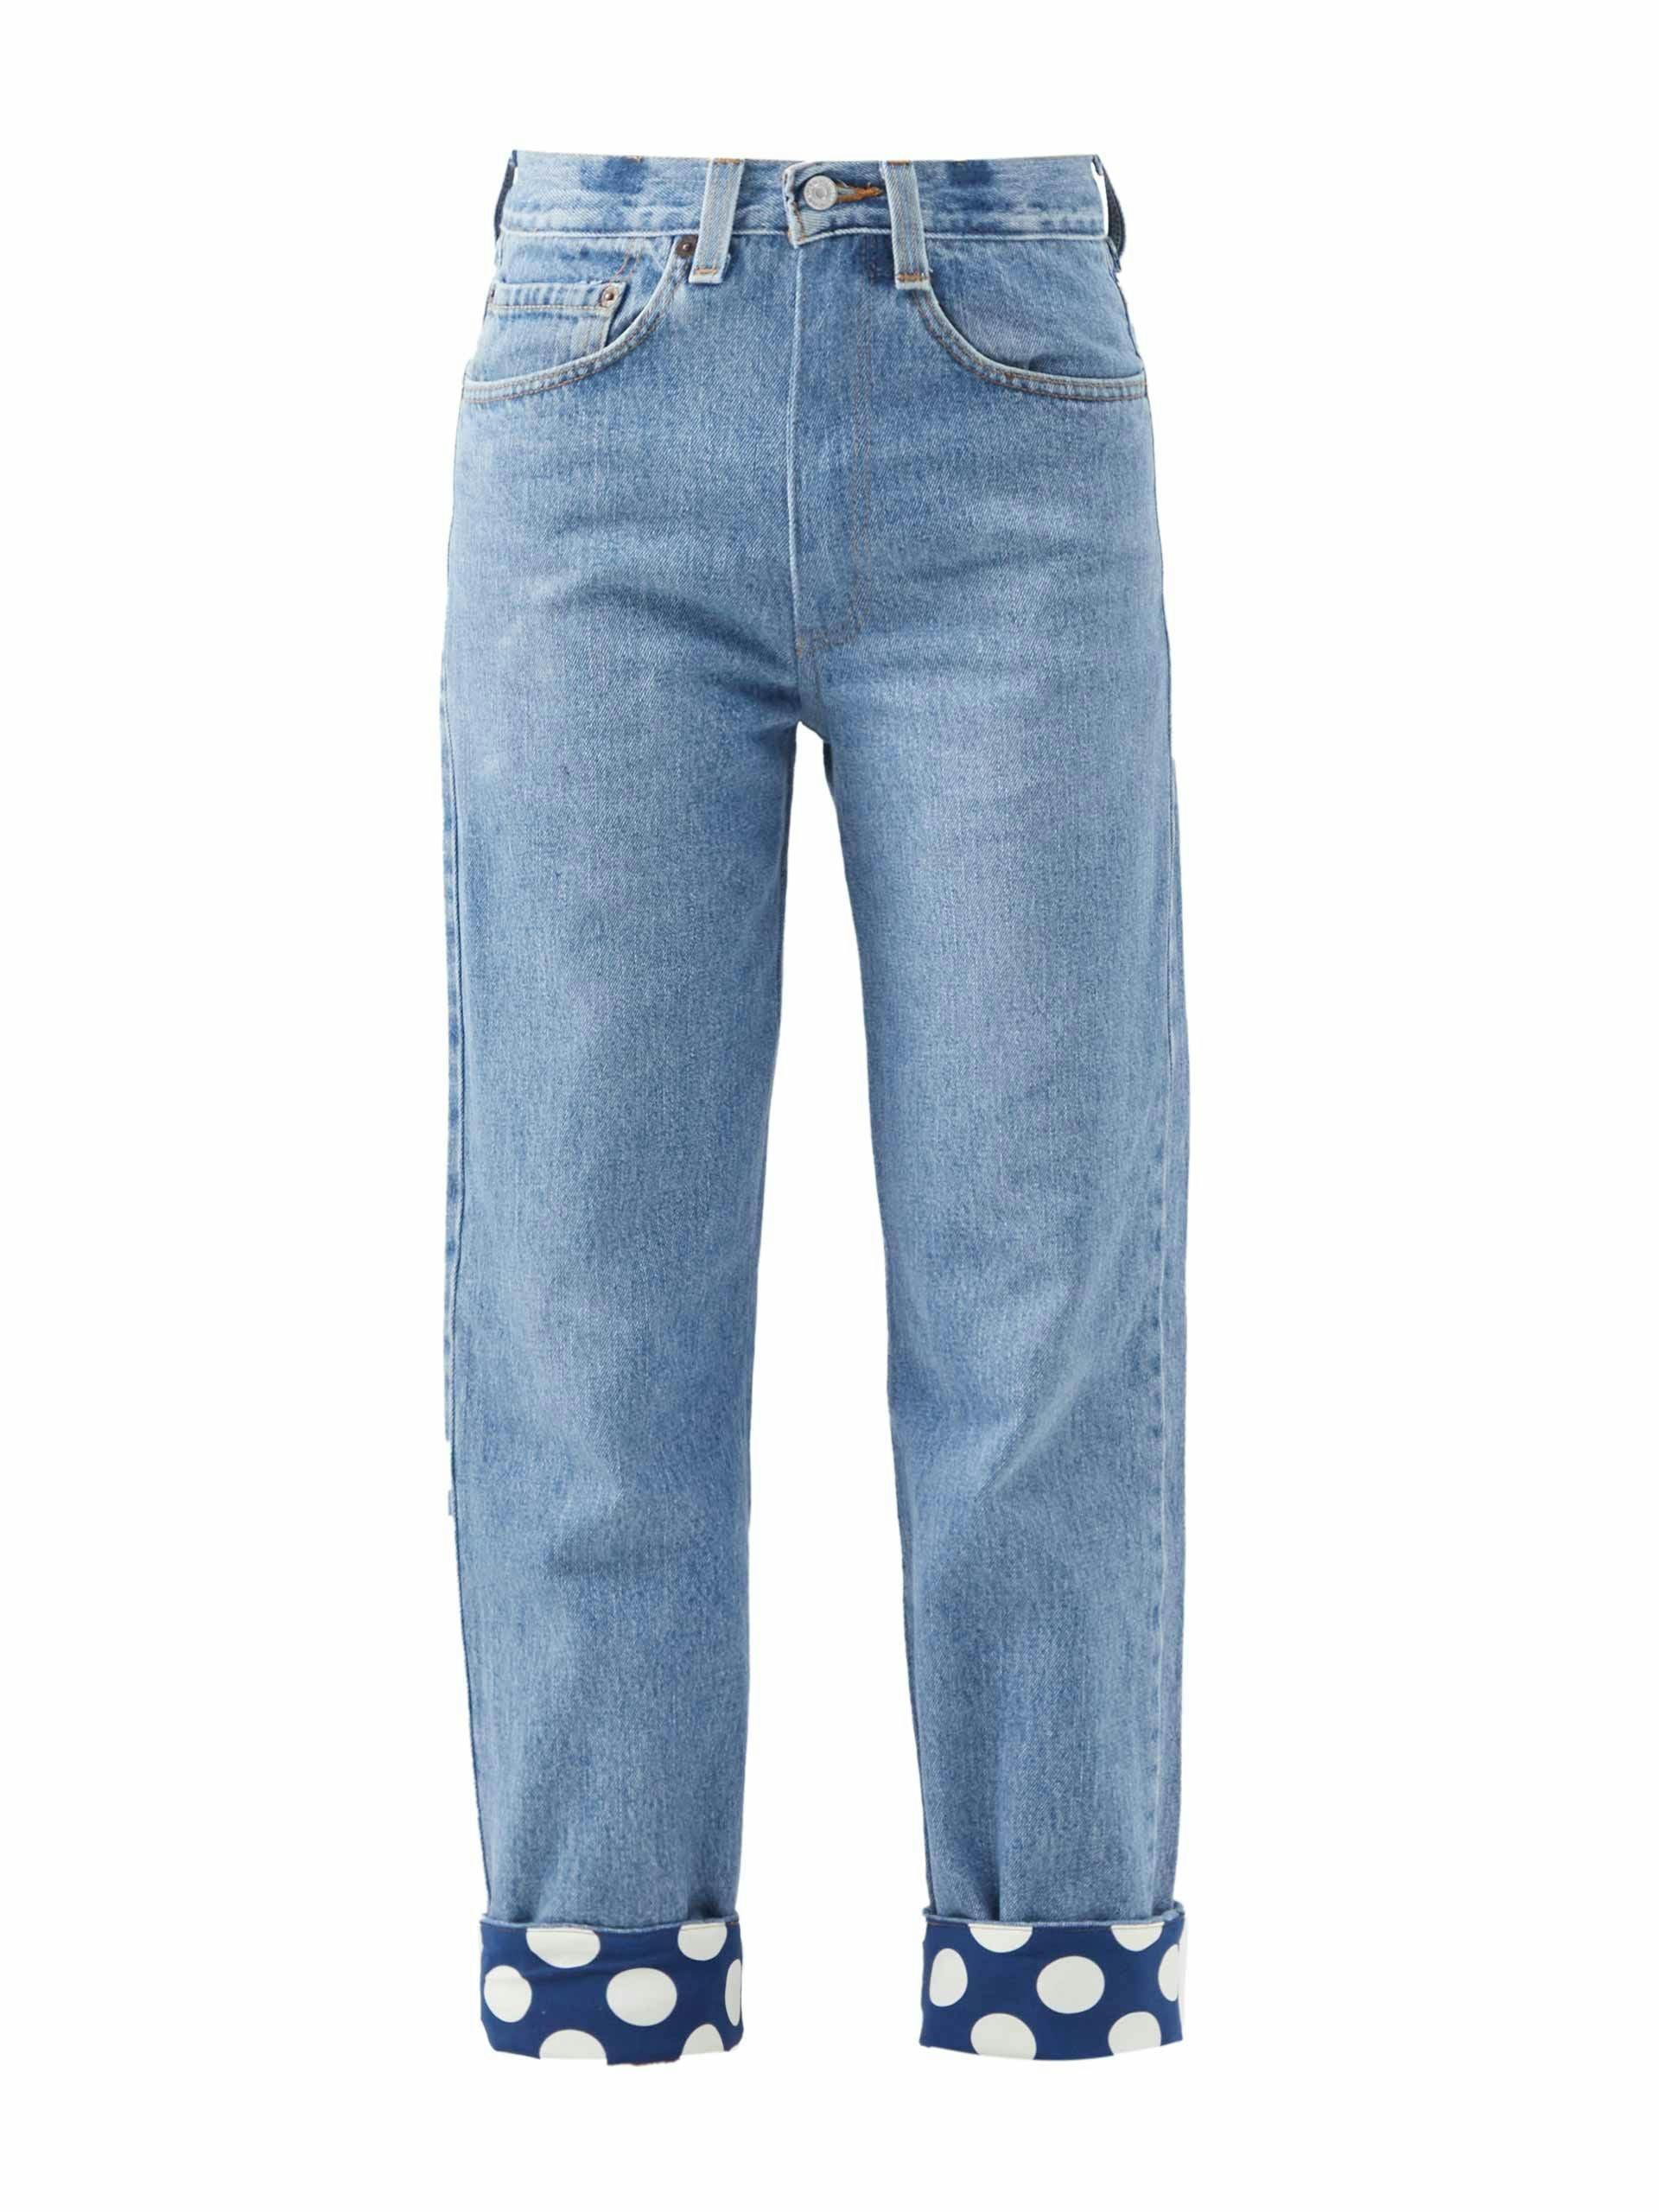 Reworked Levi's denim straight-leg jeans